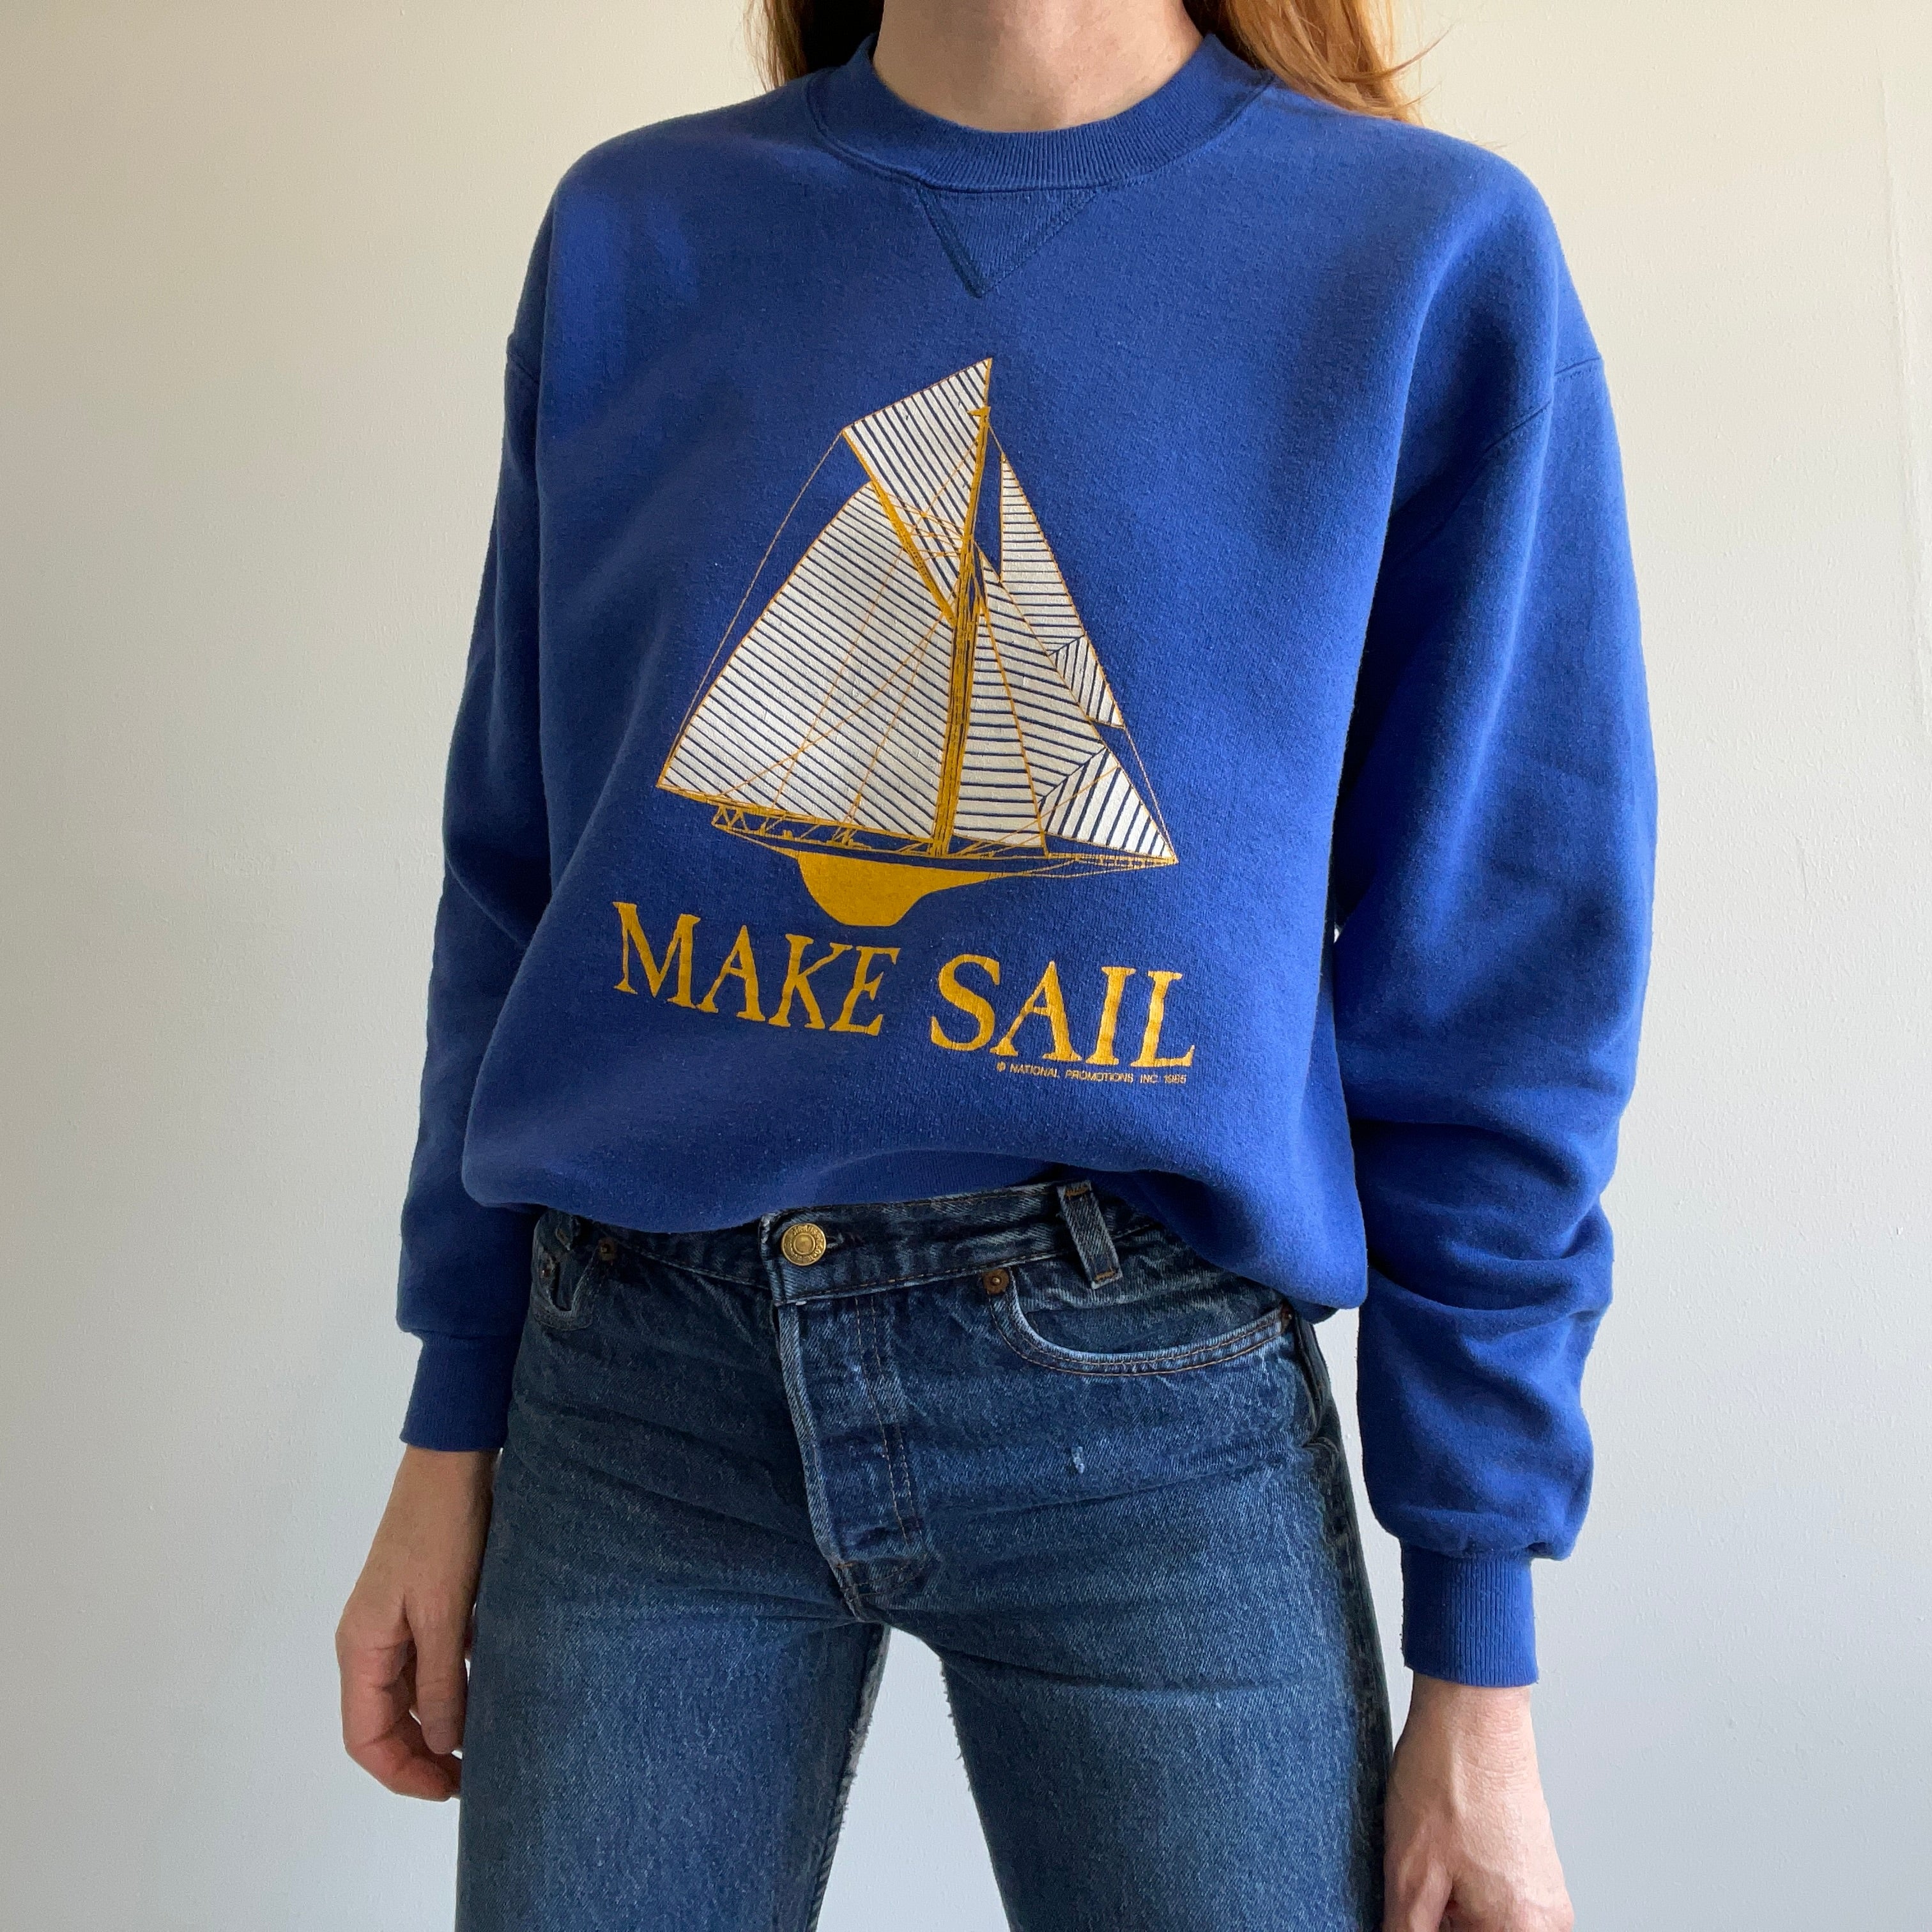 1985 SAIL (Boat) Sweatshirt by Jerzees